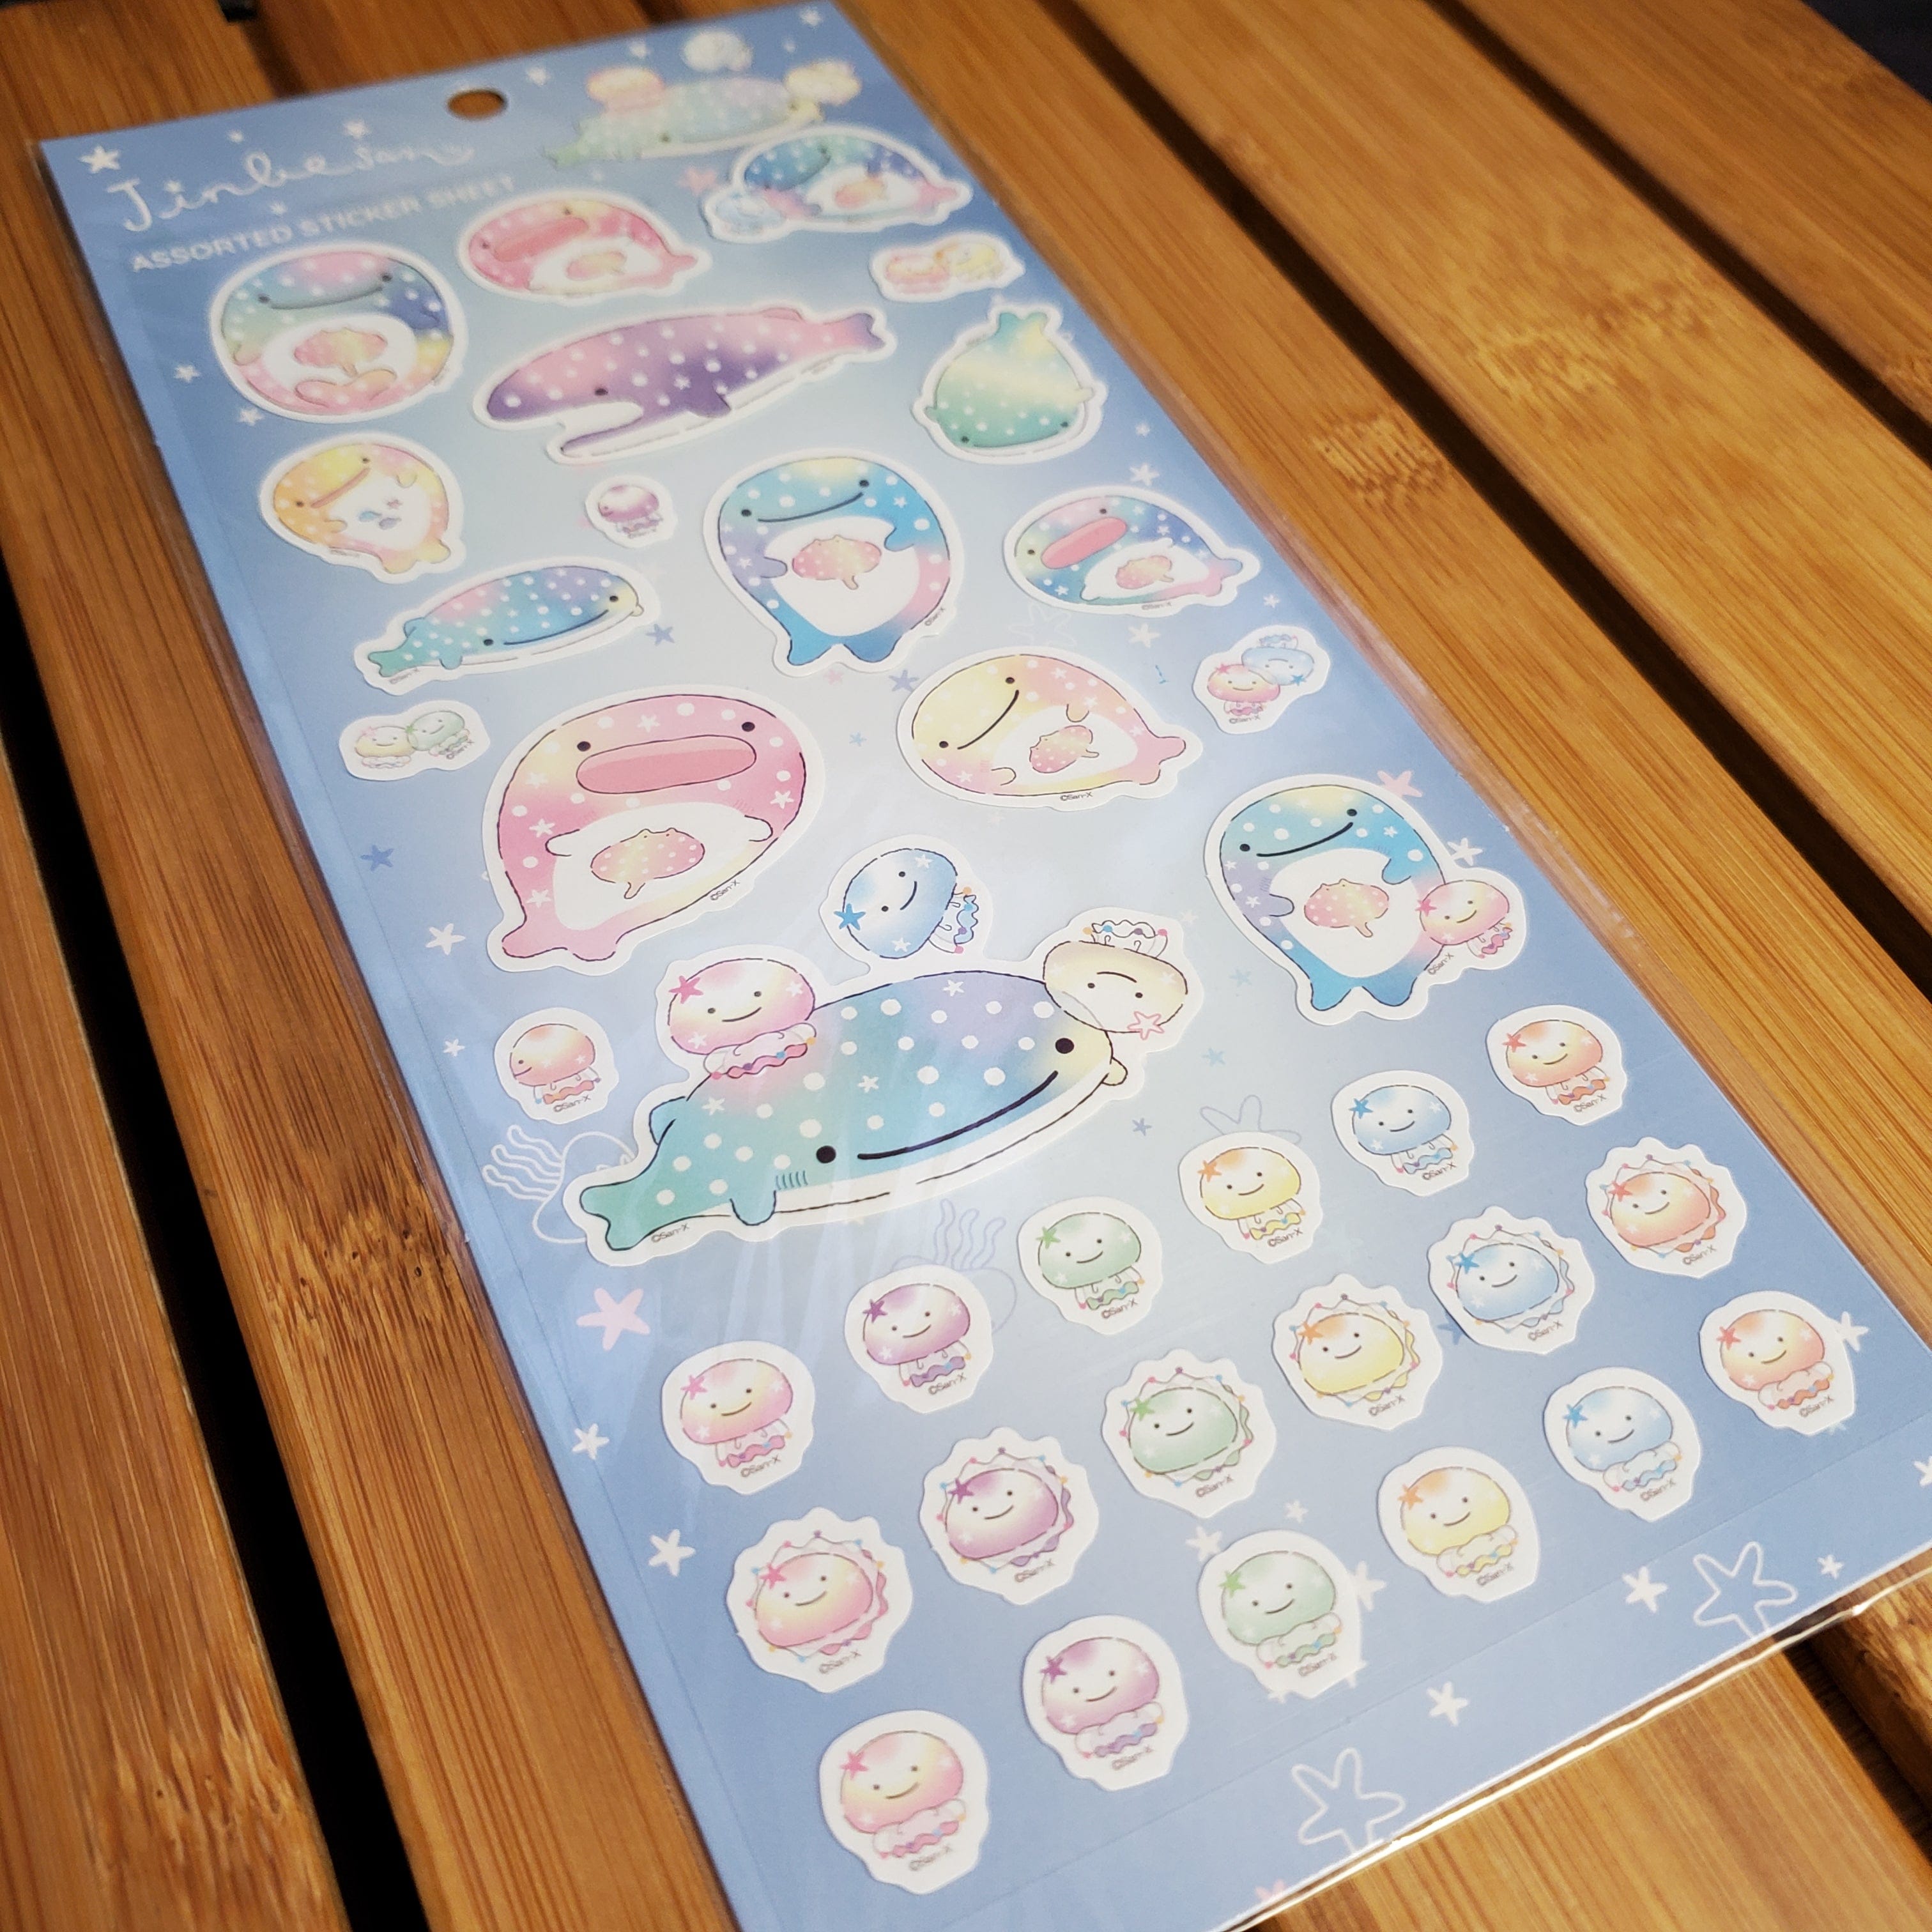 Aliquantum Jinbesan Nanairokurage Stickers Kawaii Gifts